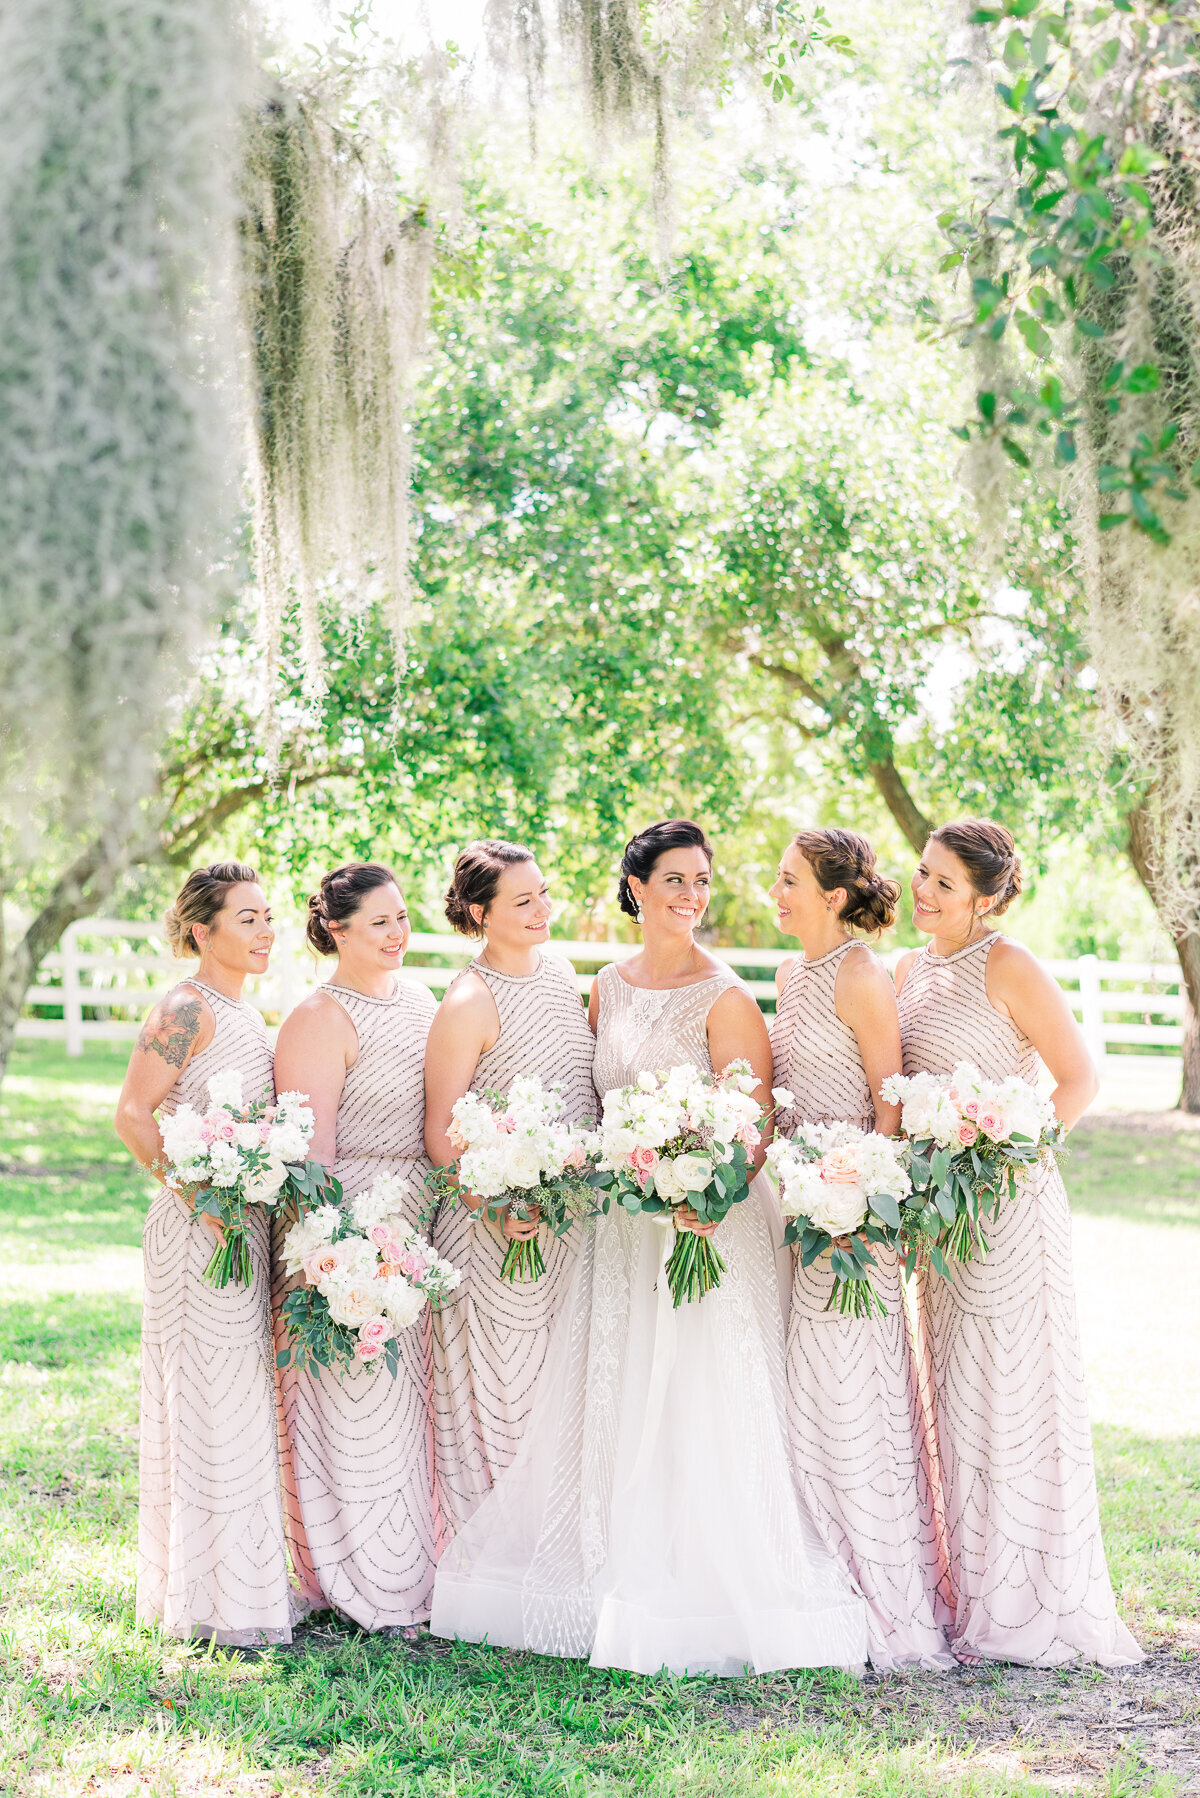 Carlin & Peter Up the Creek Farms Wedding Bridesmaids | Lisa Marshall Photography